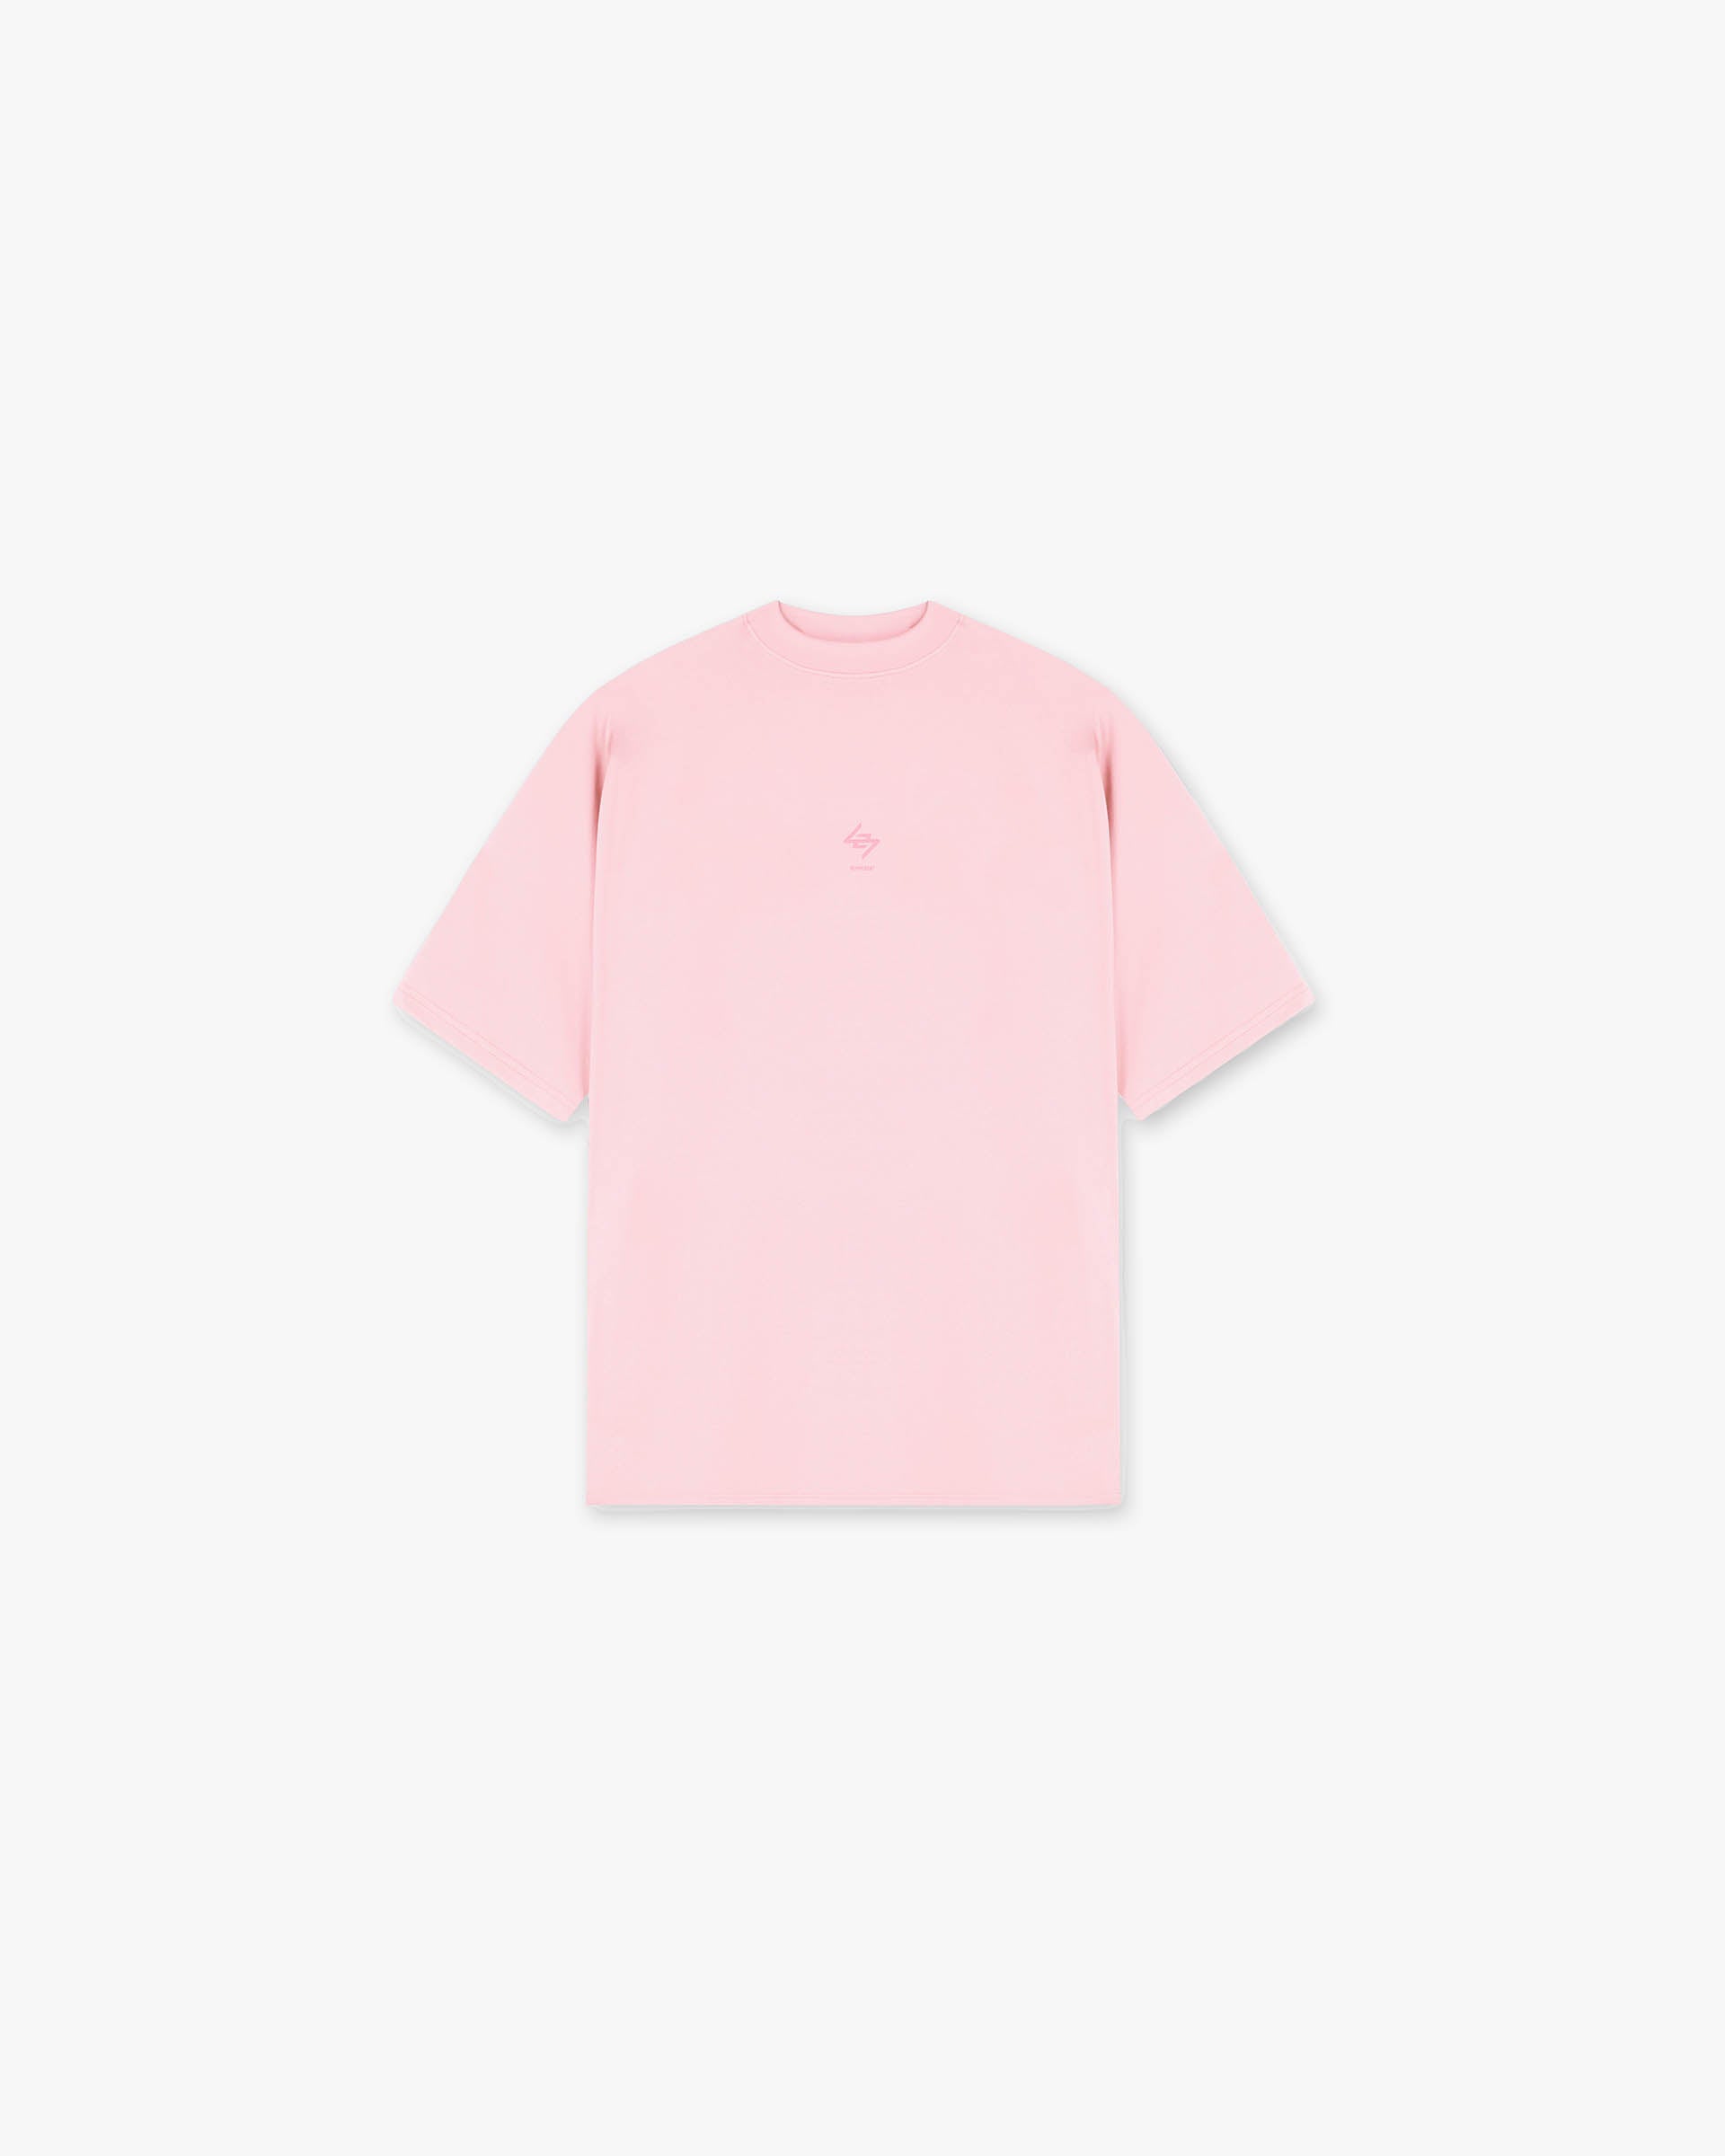 London 247 Oversized T-Shirt - Candy Pink